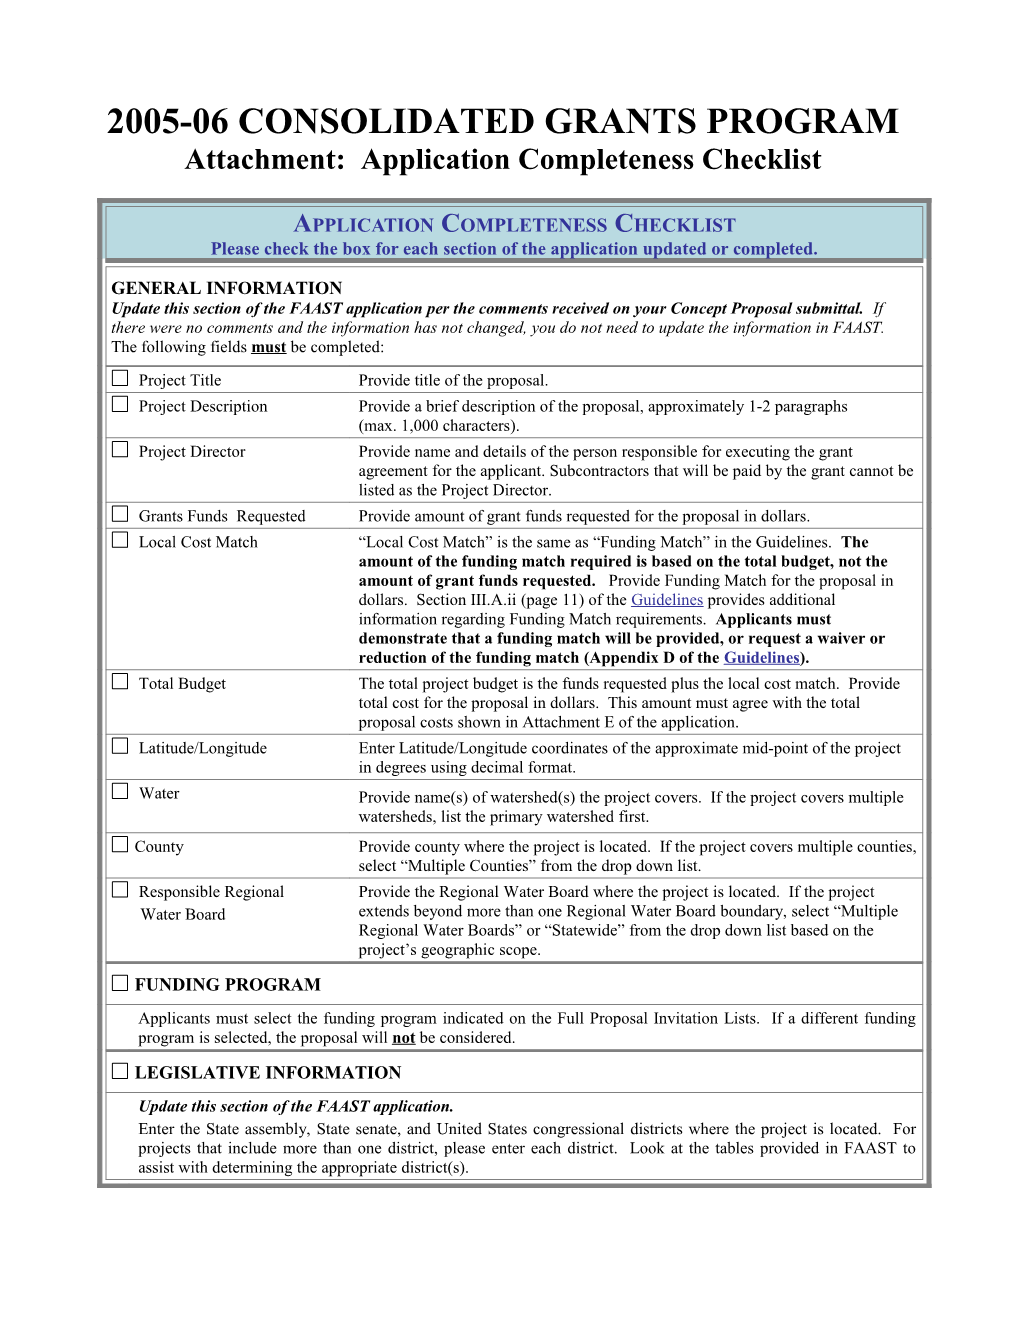 Application Completeness Checklist